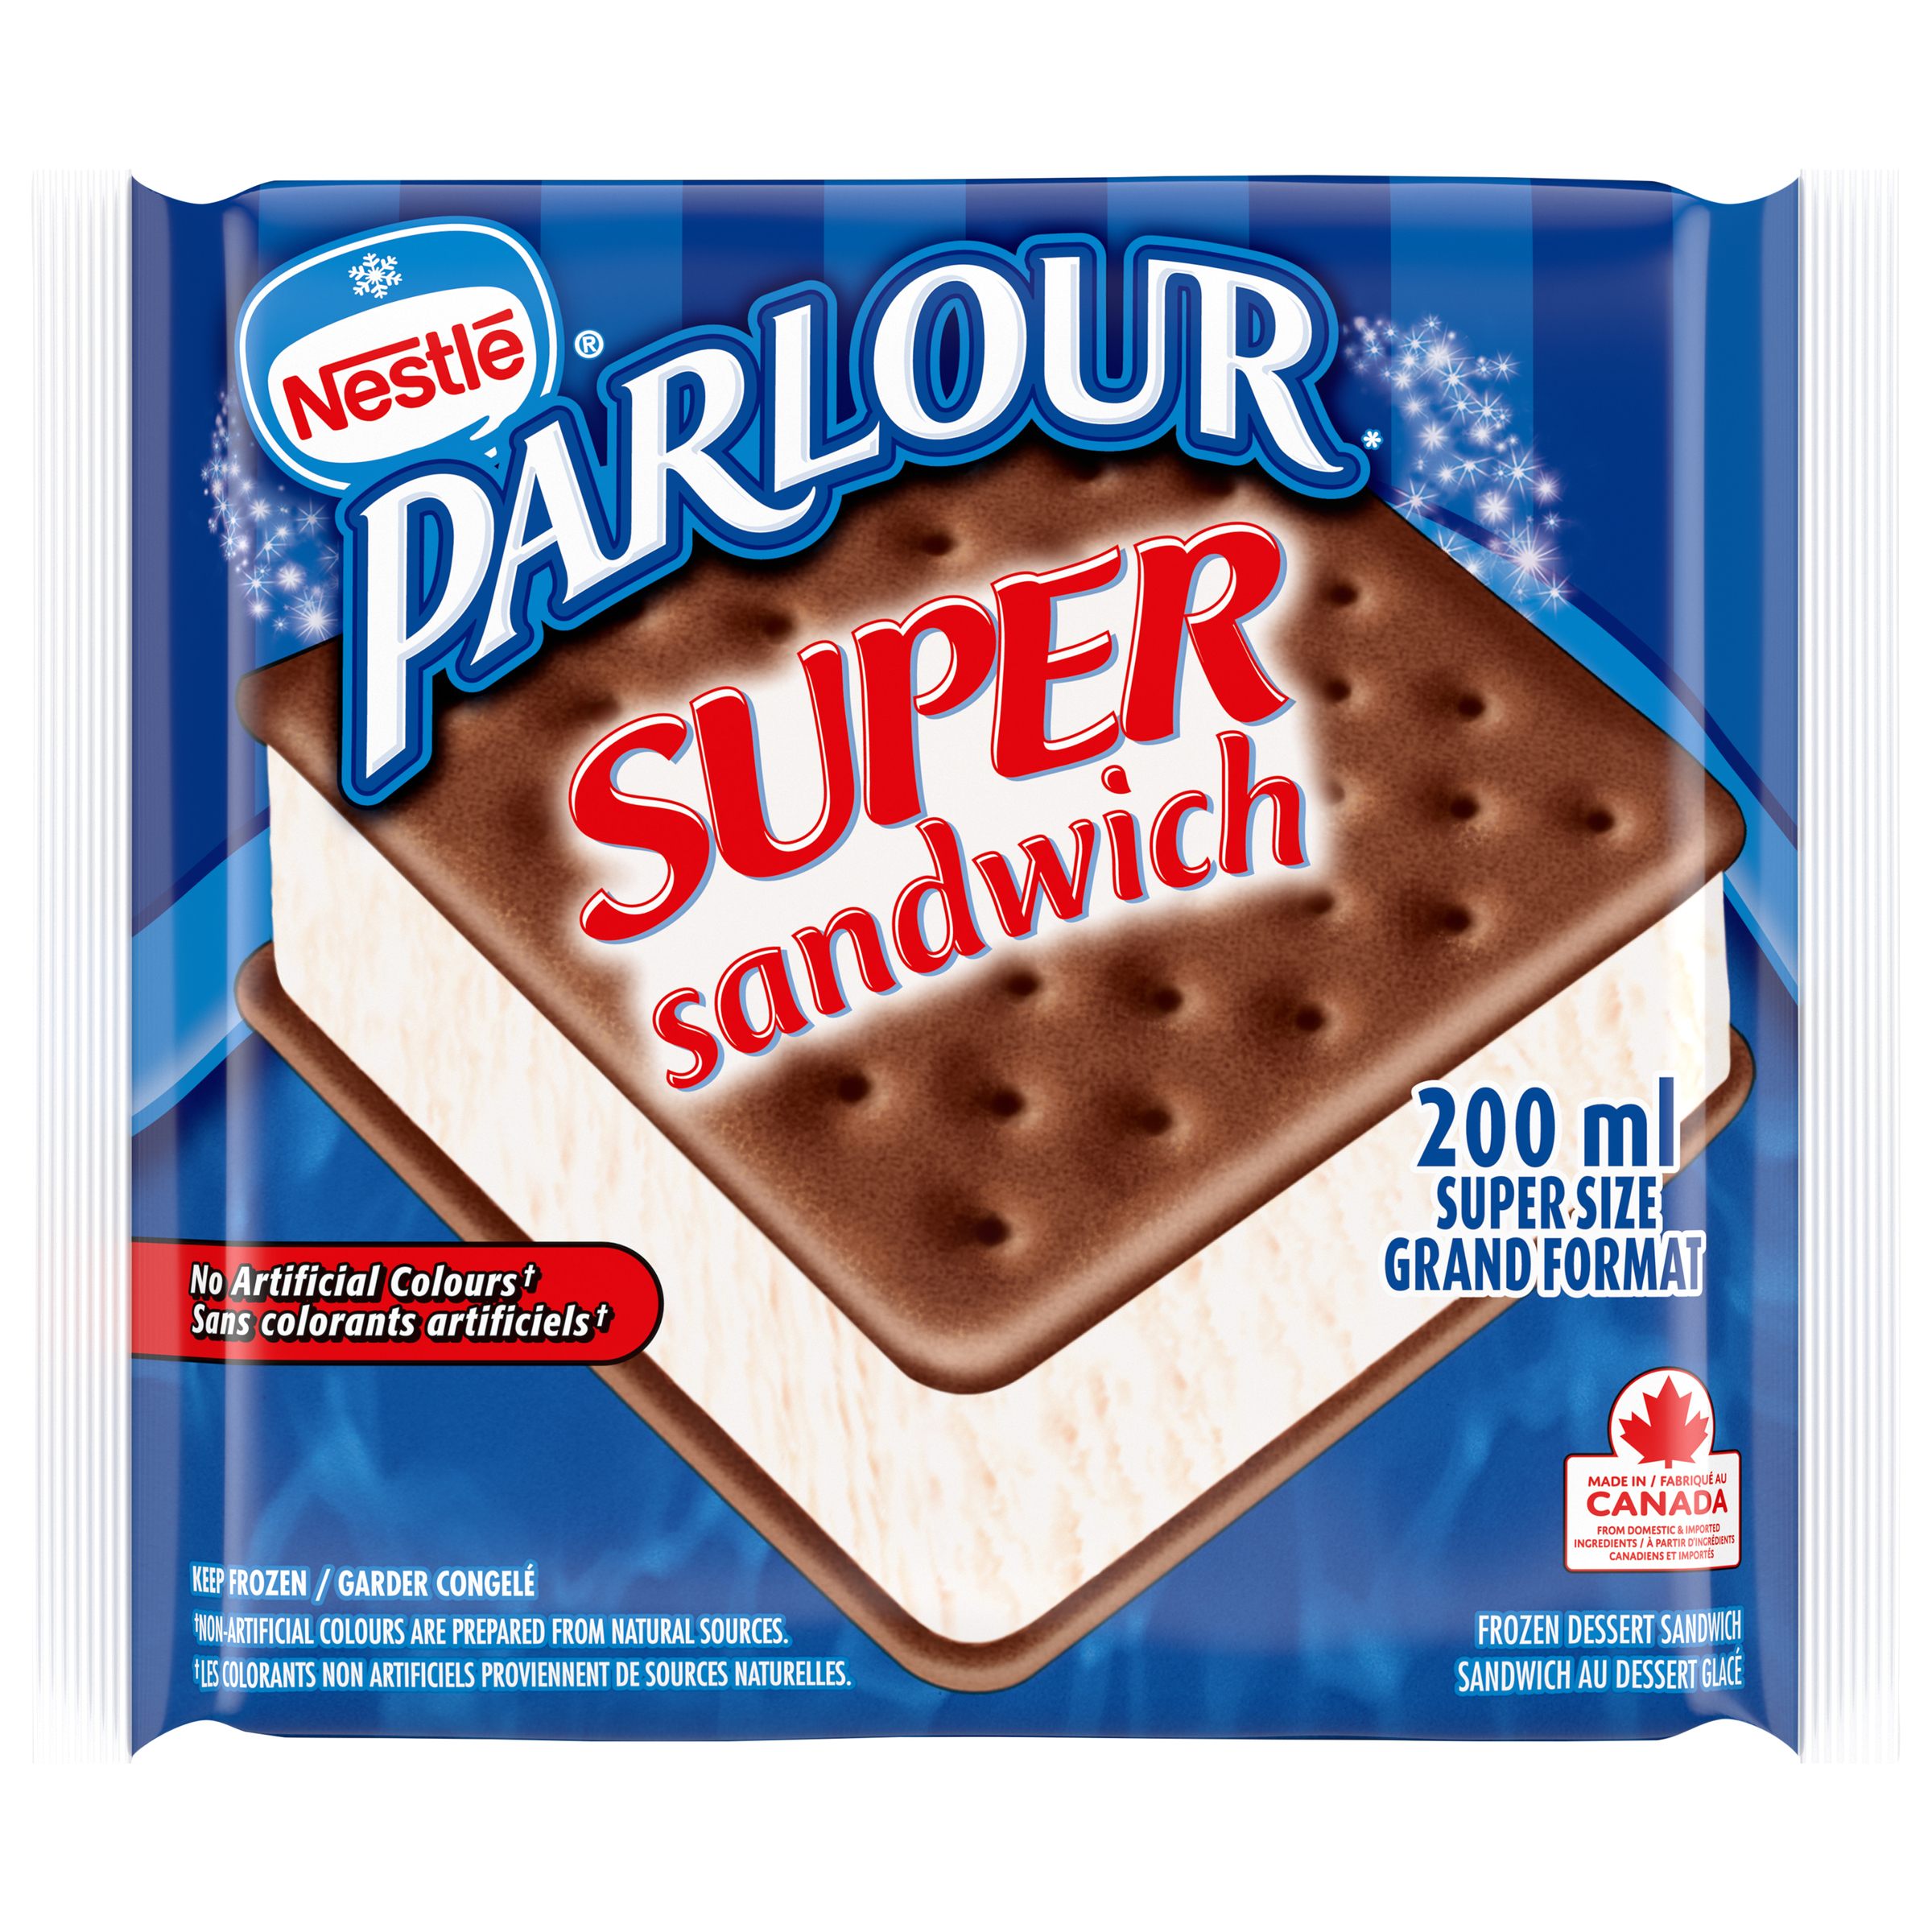 PARLOUR SUPER SANDWICH 200ML